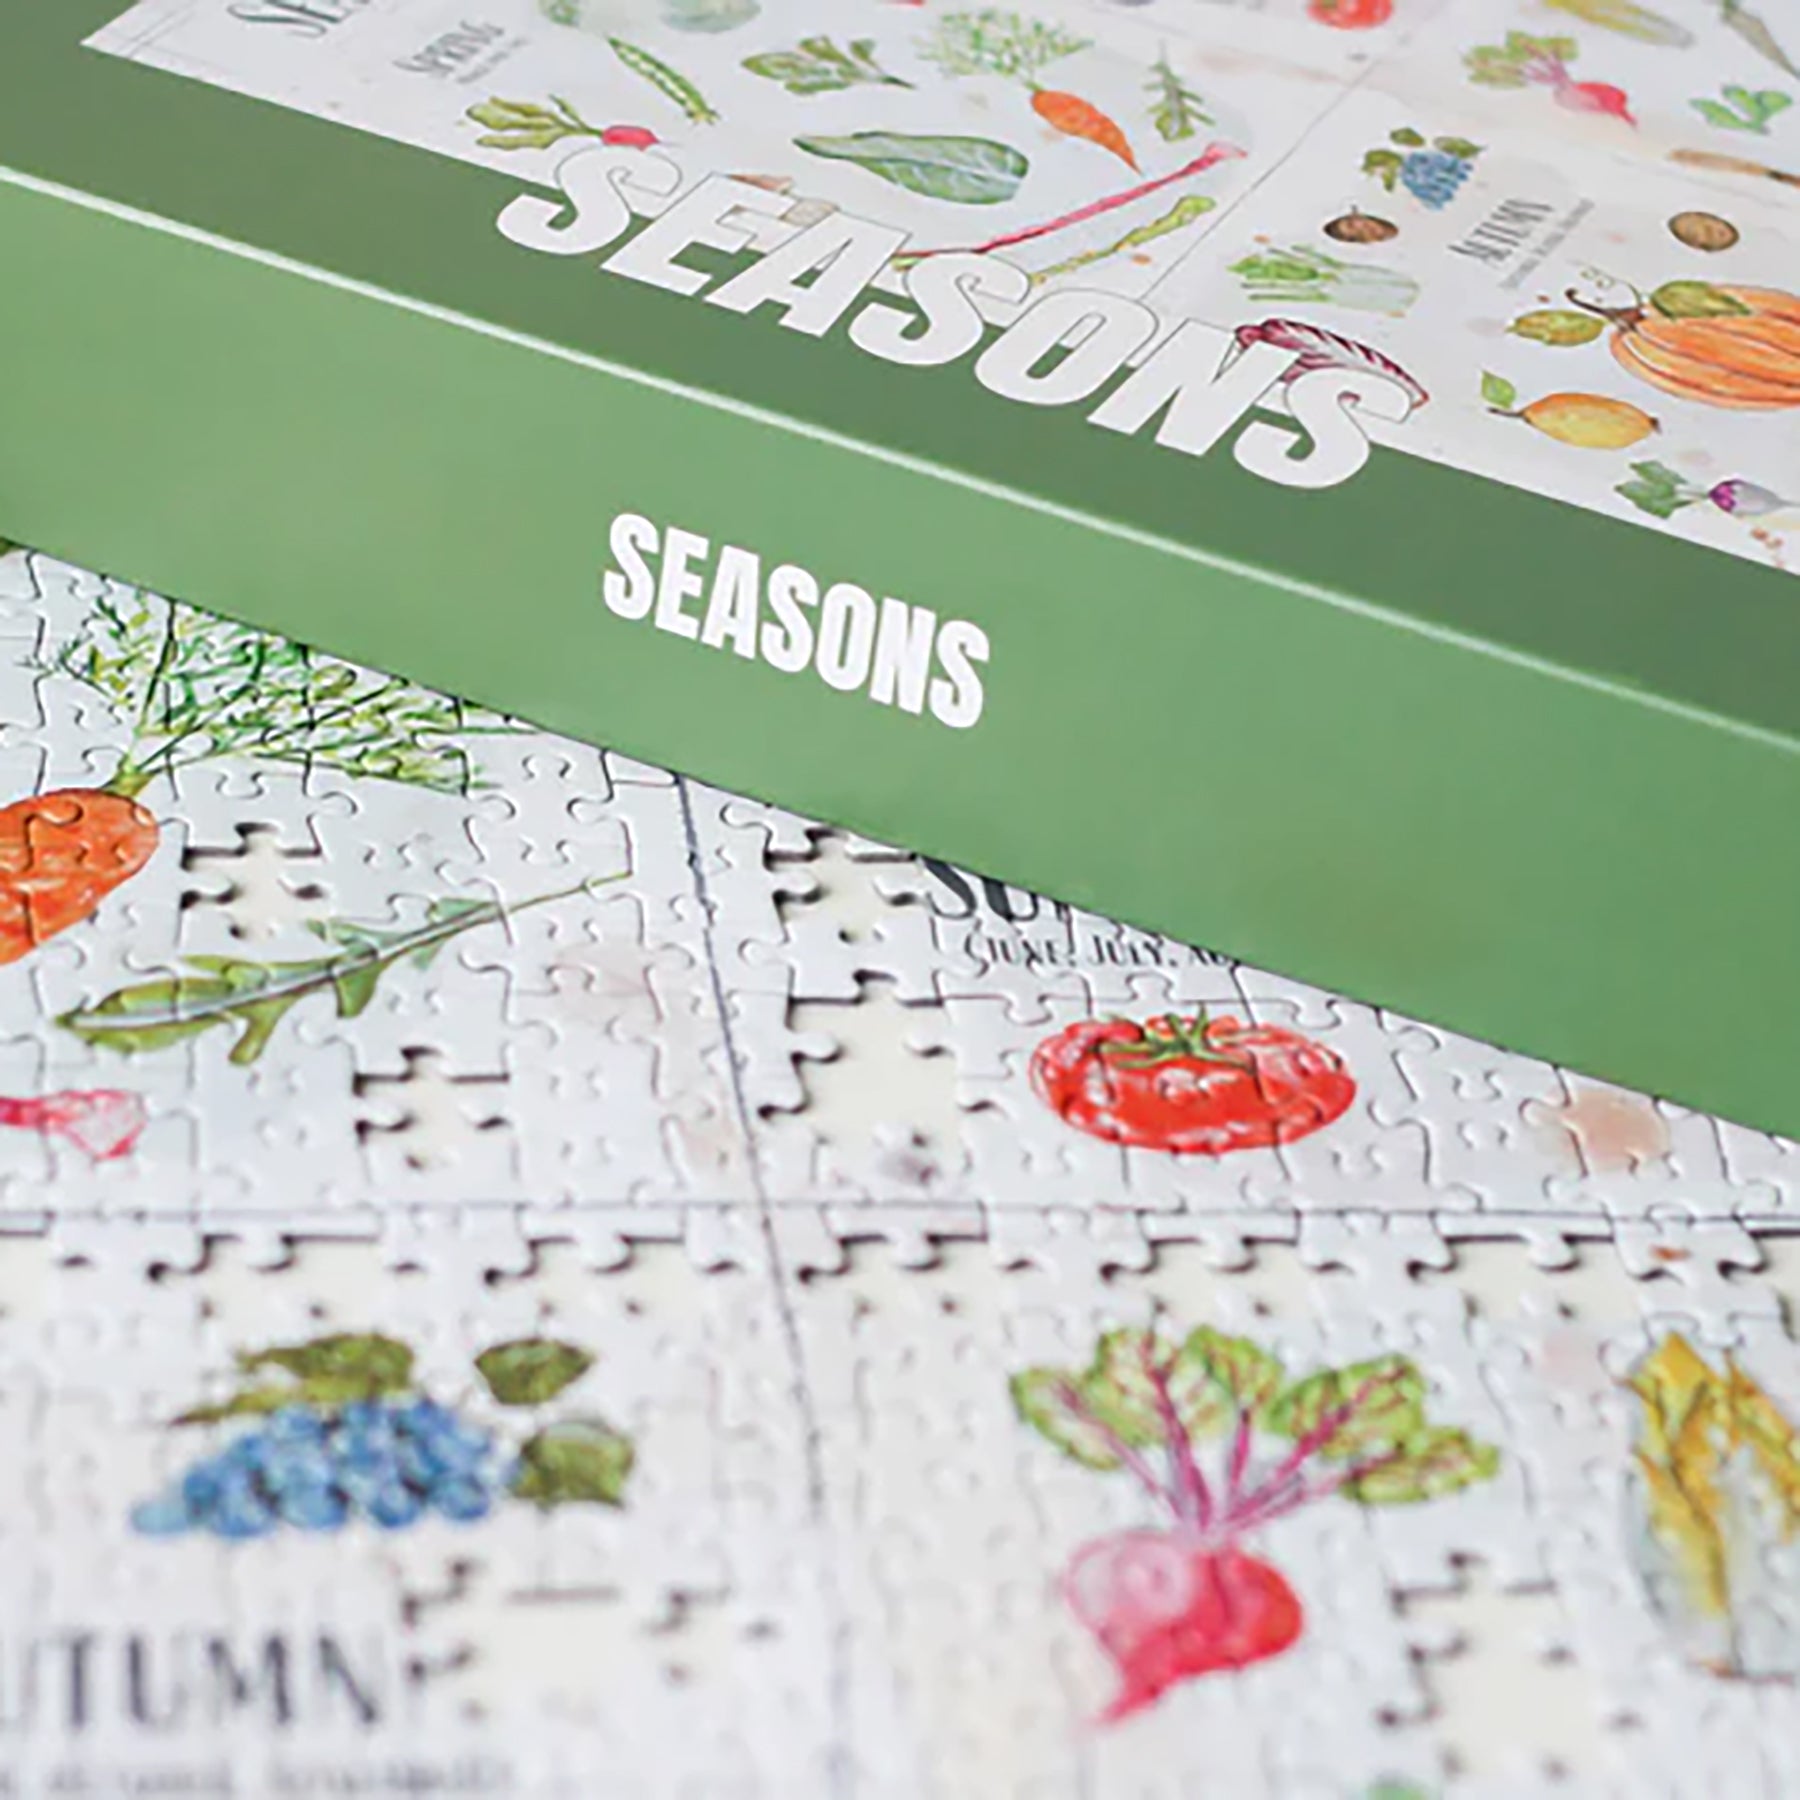 Herring & Bones - Concept Store Joyeux - Piecely - Puzzles - Puzzle "Seasons"